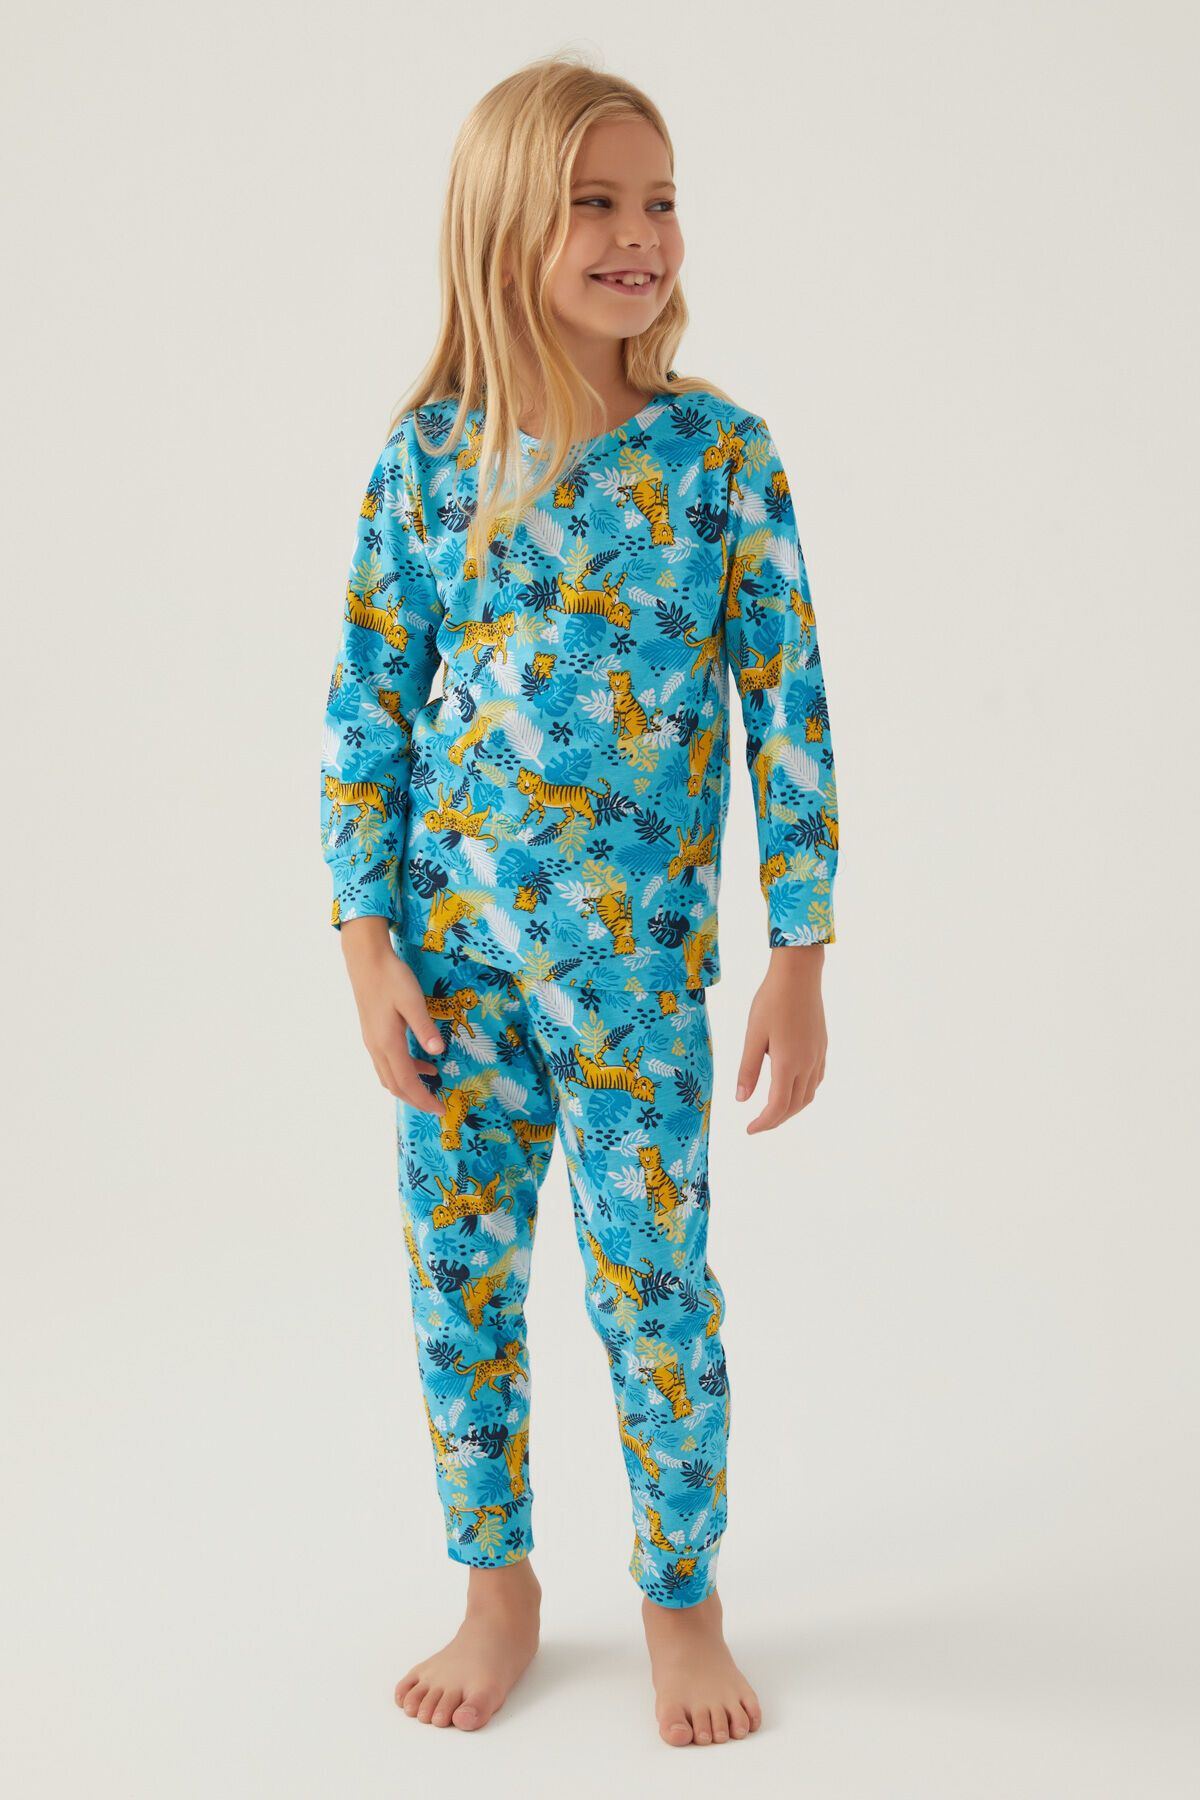 Rolypoly Turkuaz Kız Çocuk Pijama Takımı